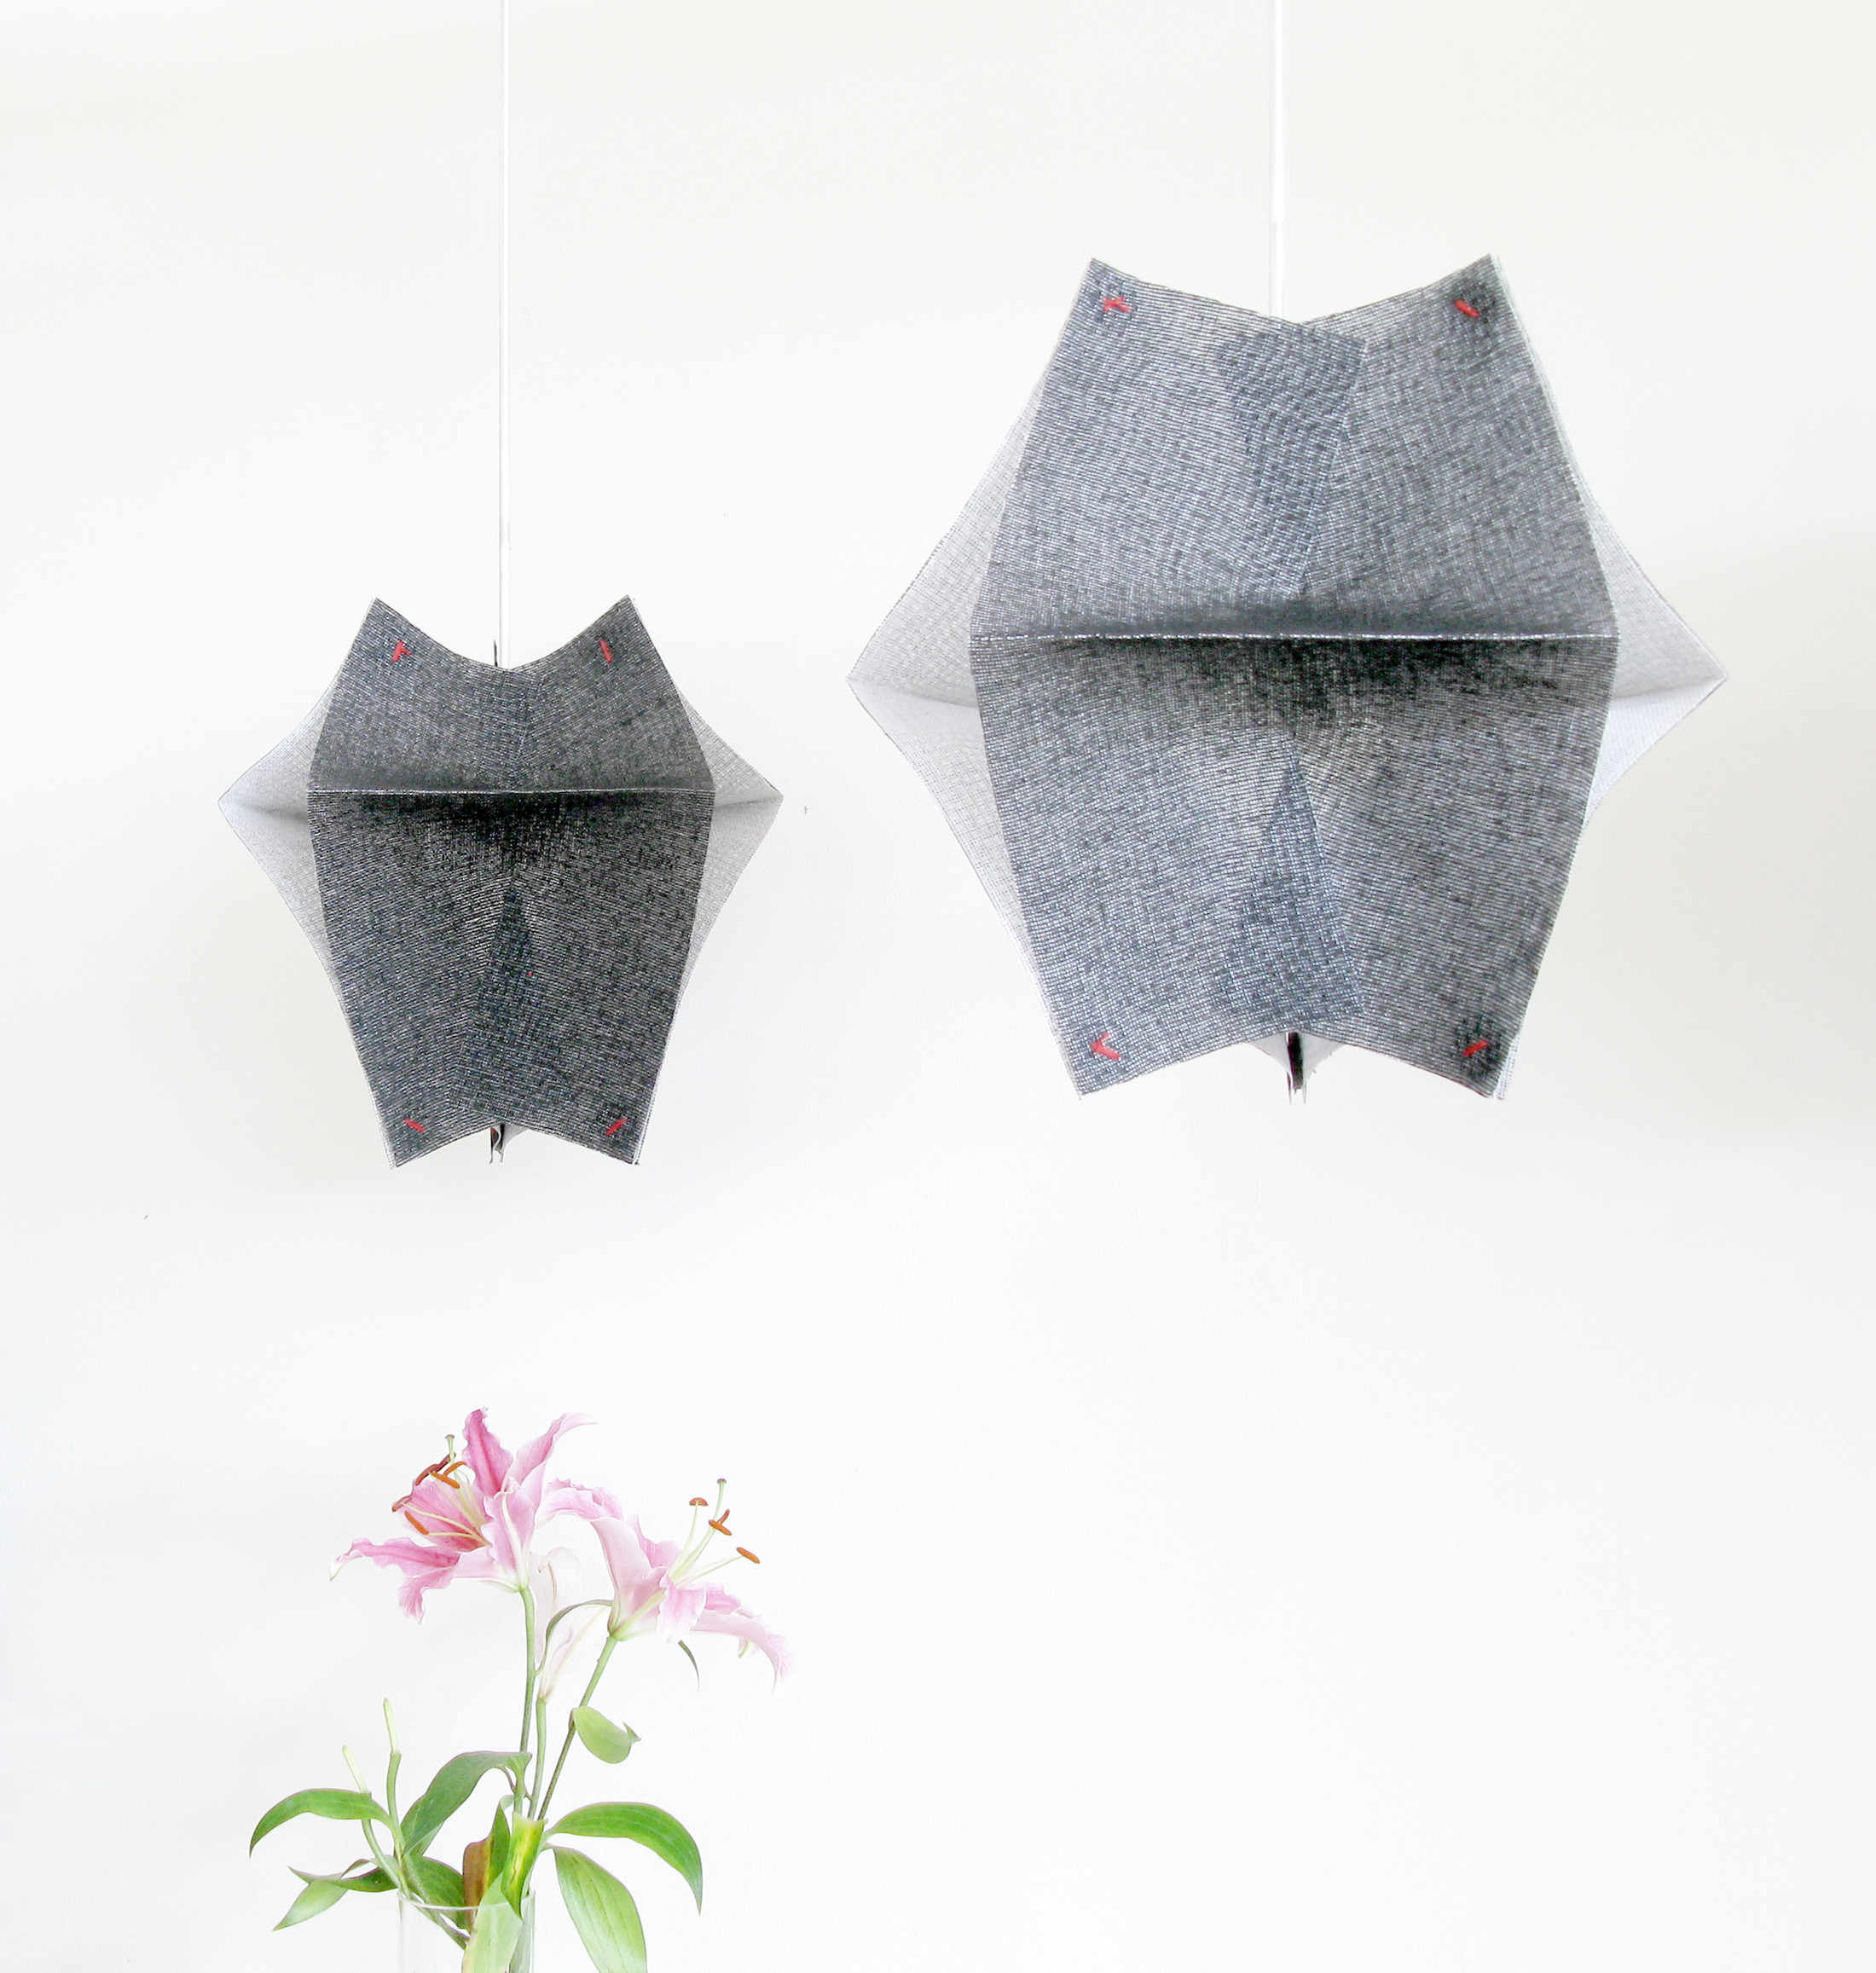 Lighting Fixtures Made of Buckram Fabric - Se’Paar by Taeg Nishimoto (11)